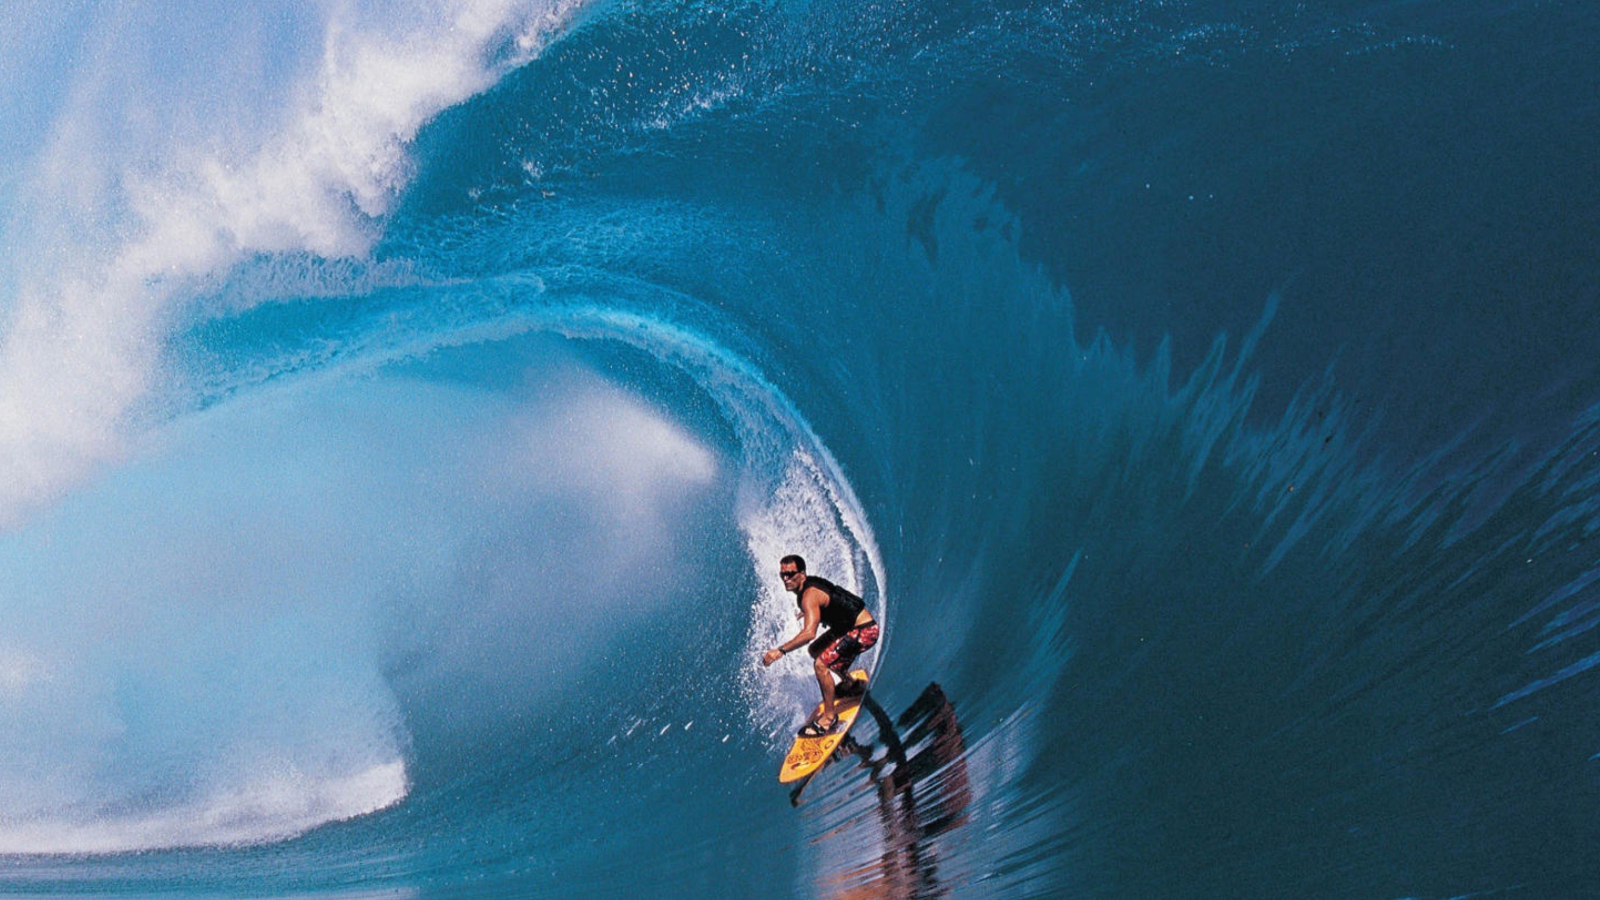 Surfer wallpaper 1600x900